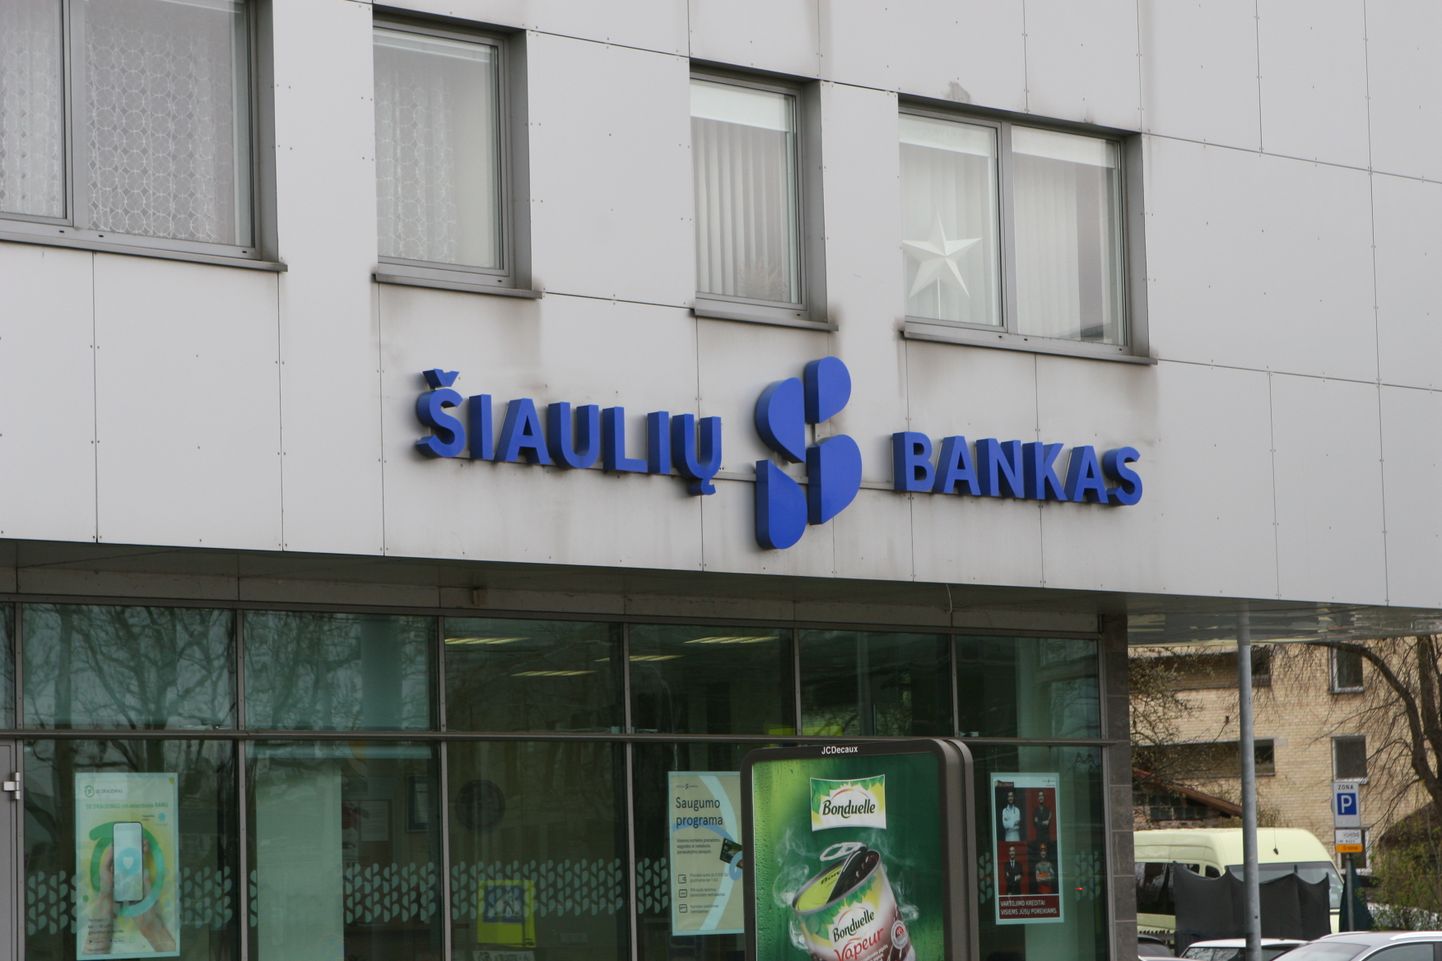 Siauliu Bankase kontor Vilniuses